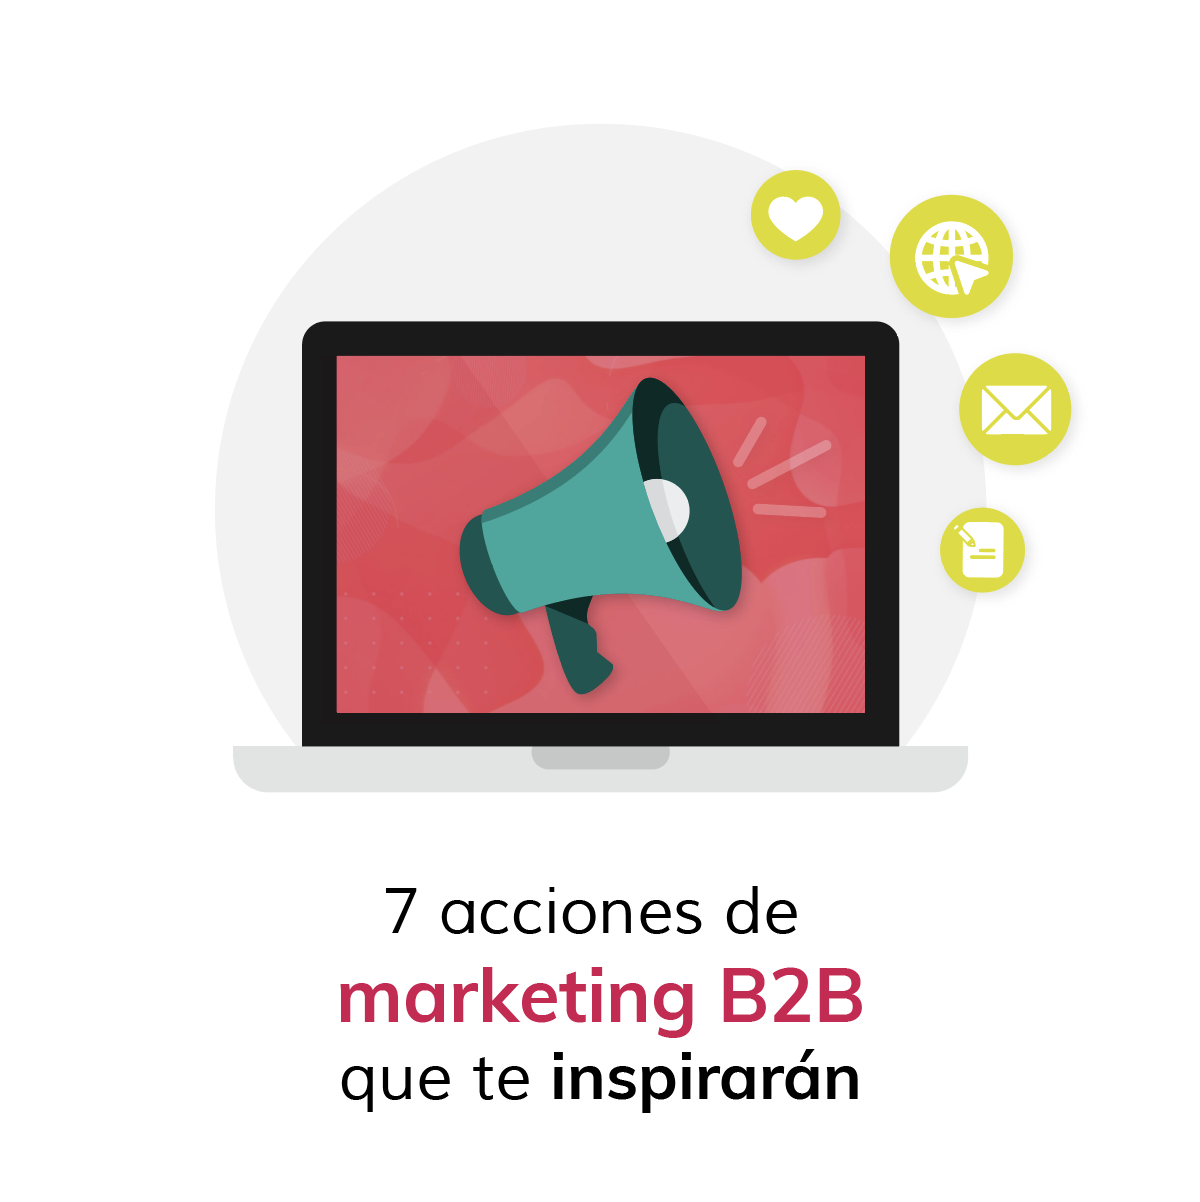 7 acciones de marketing B2B que te inspirarán